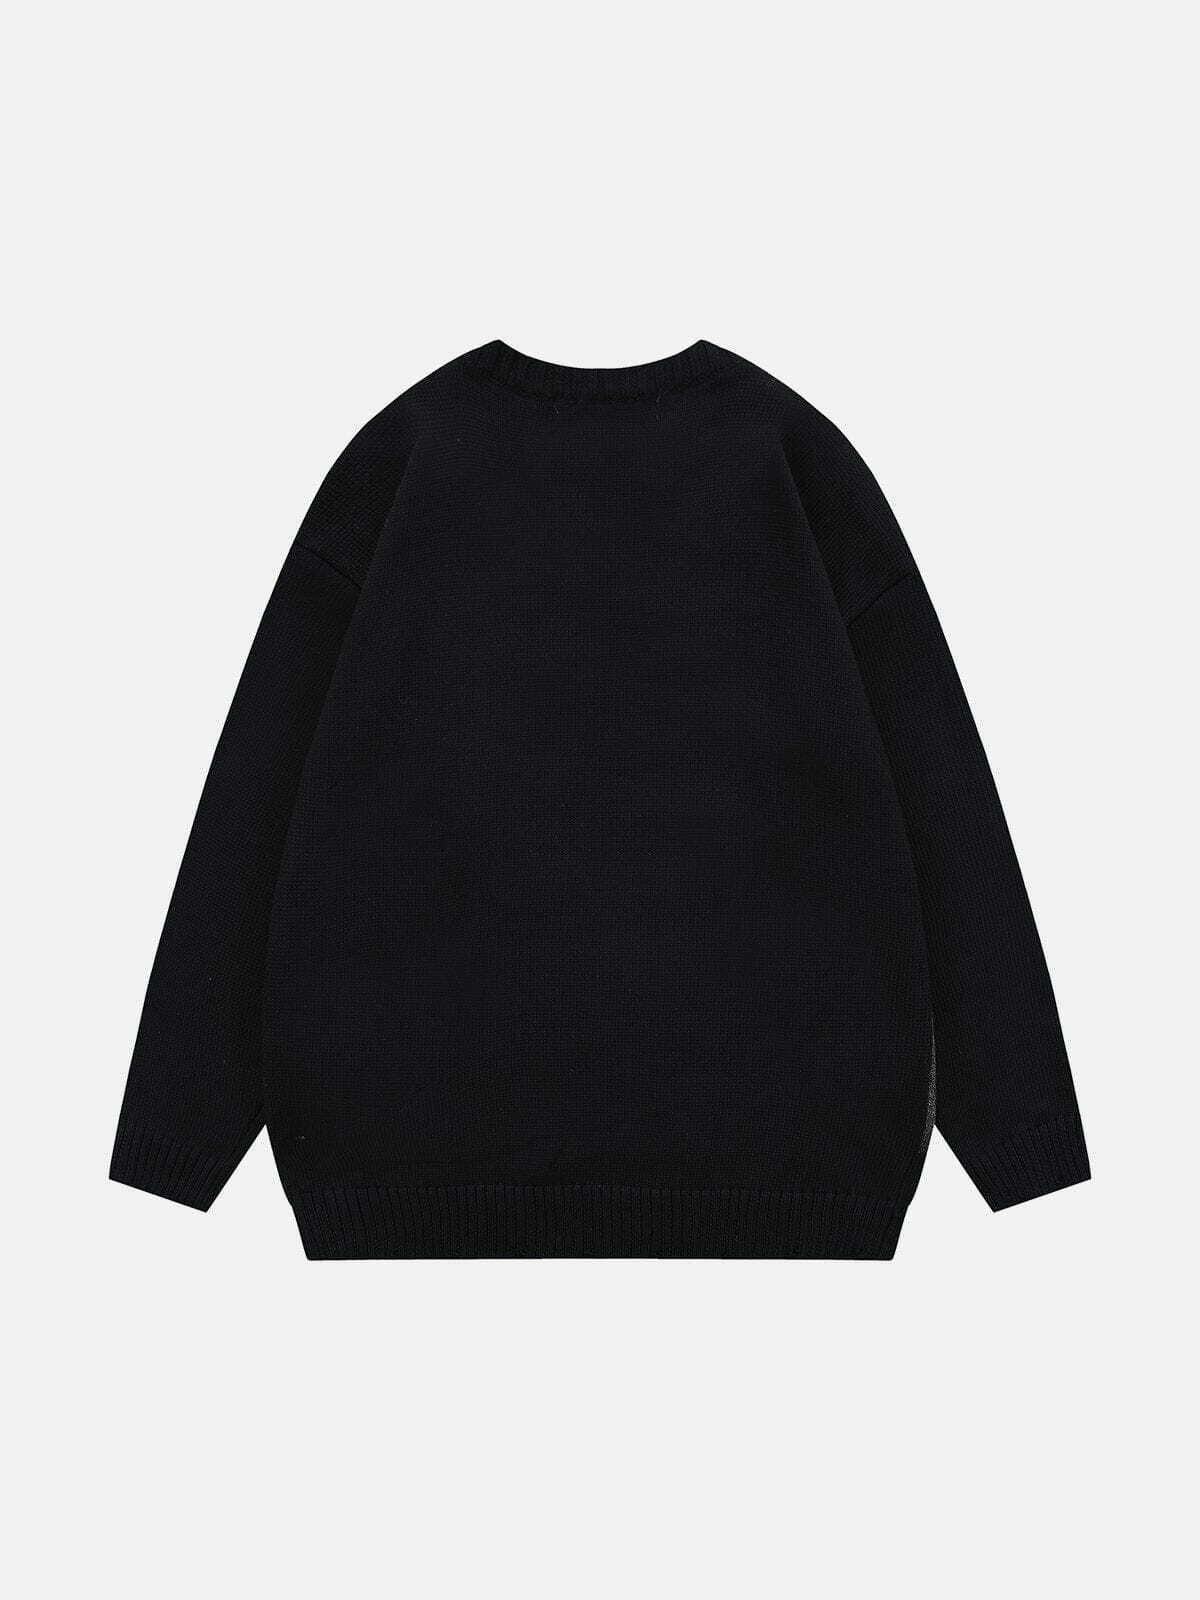 colorblock vintage letter sweater urban streetwear essential 2540